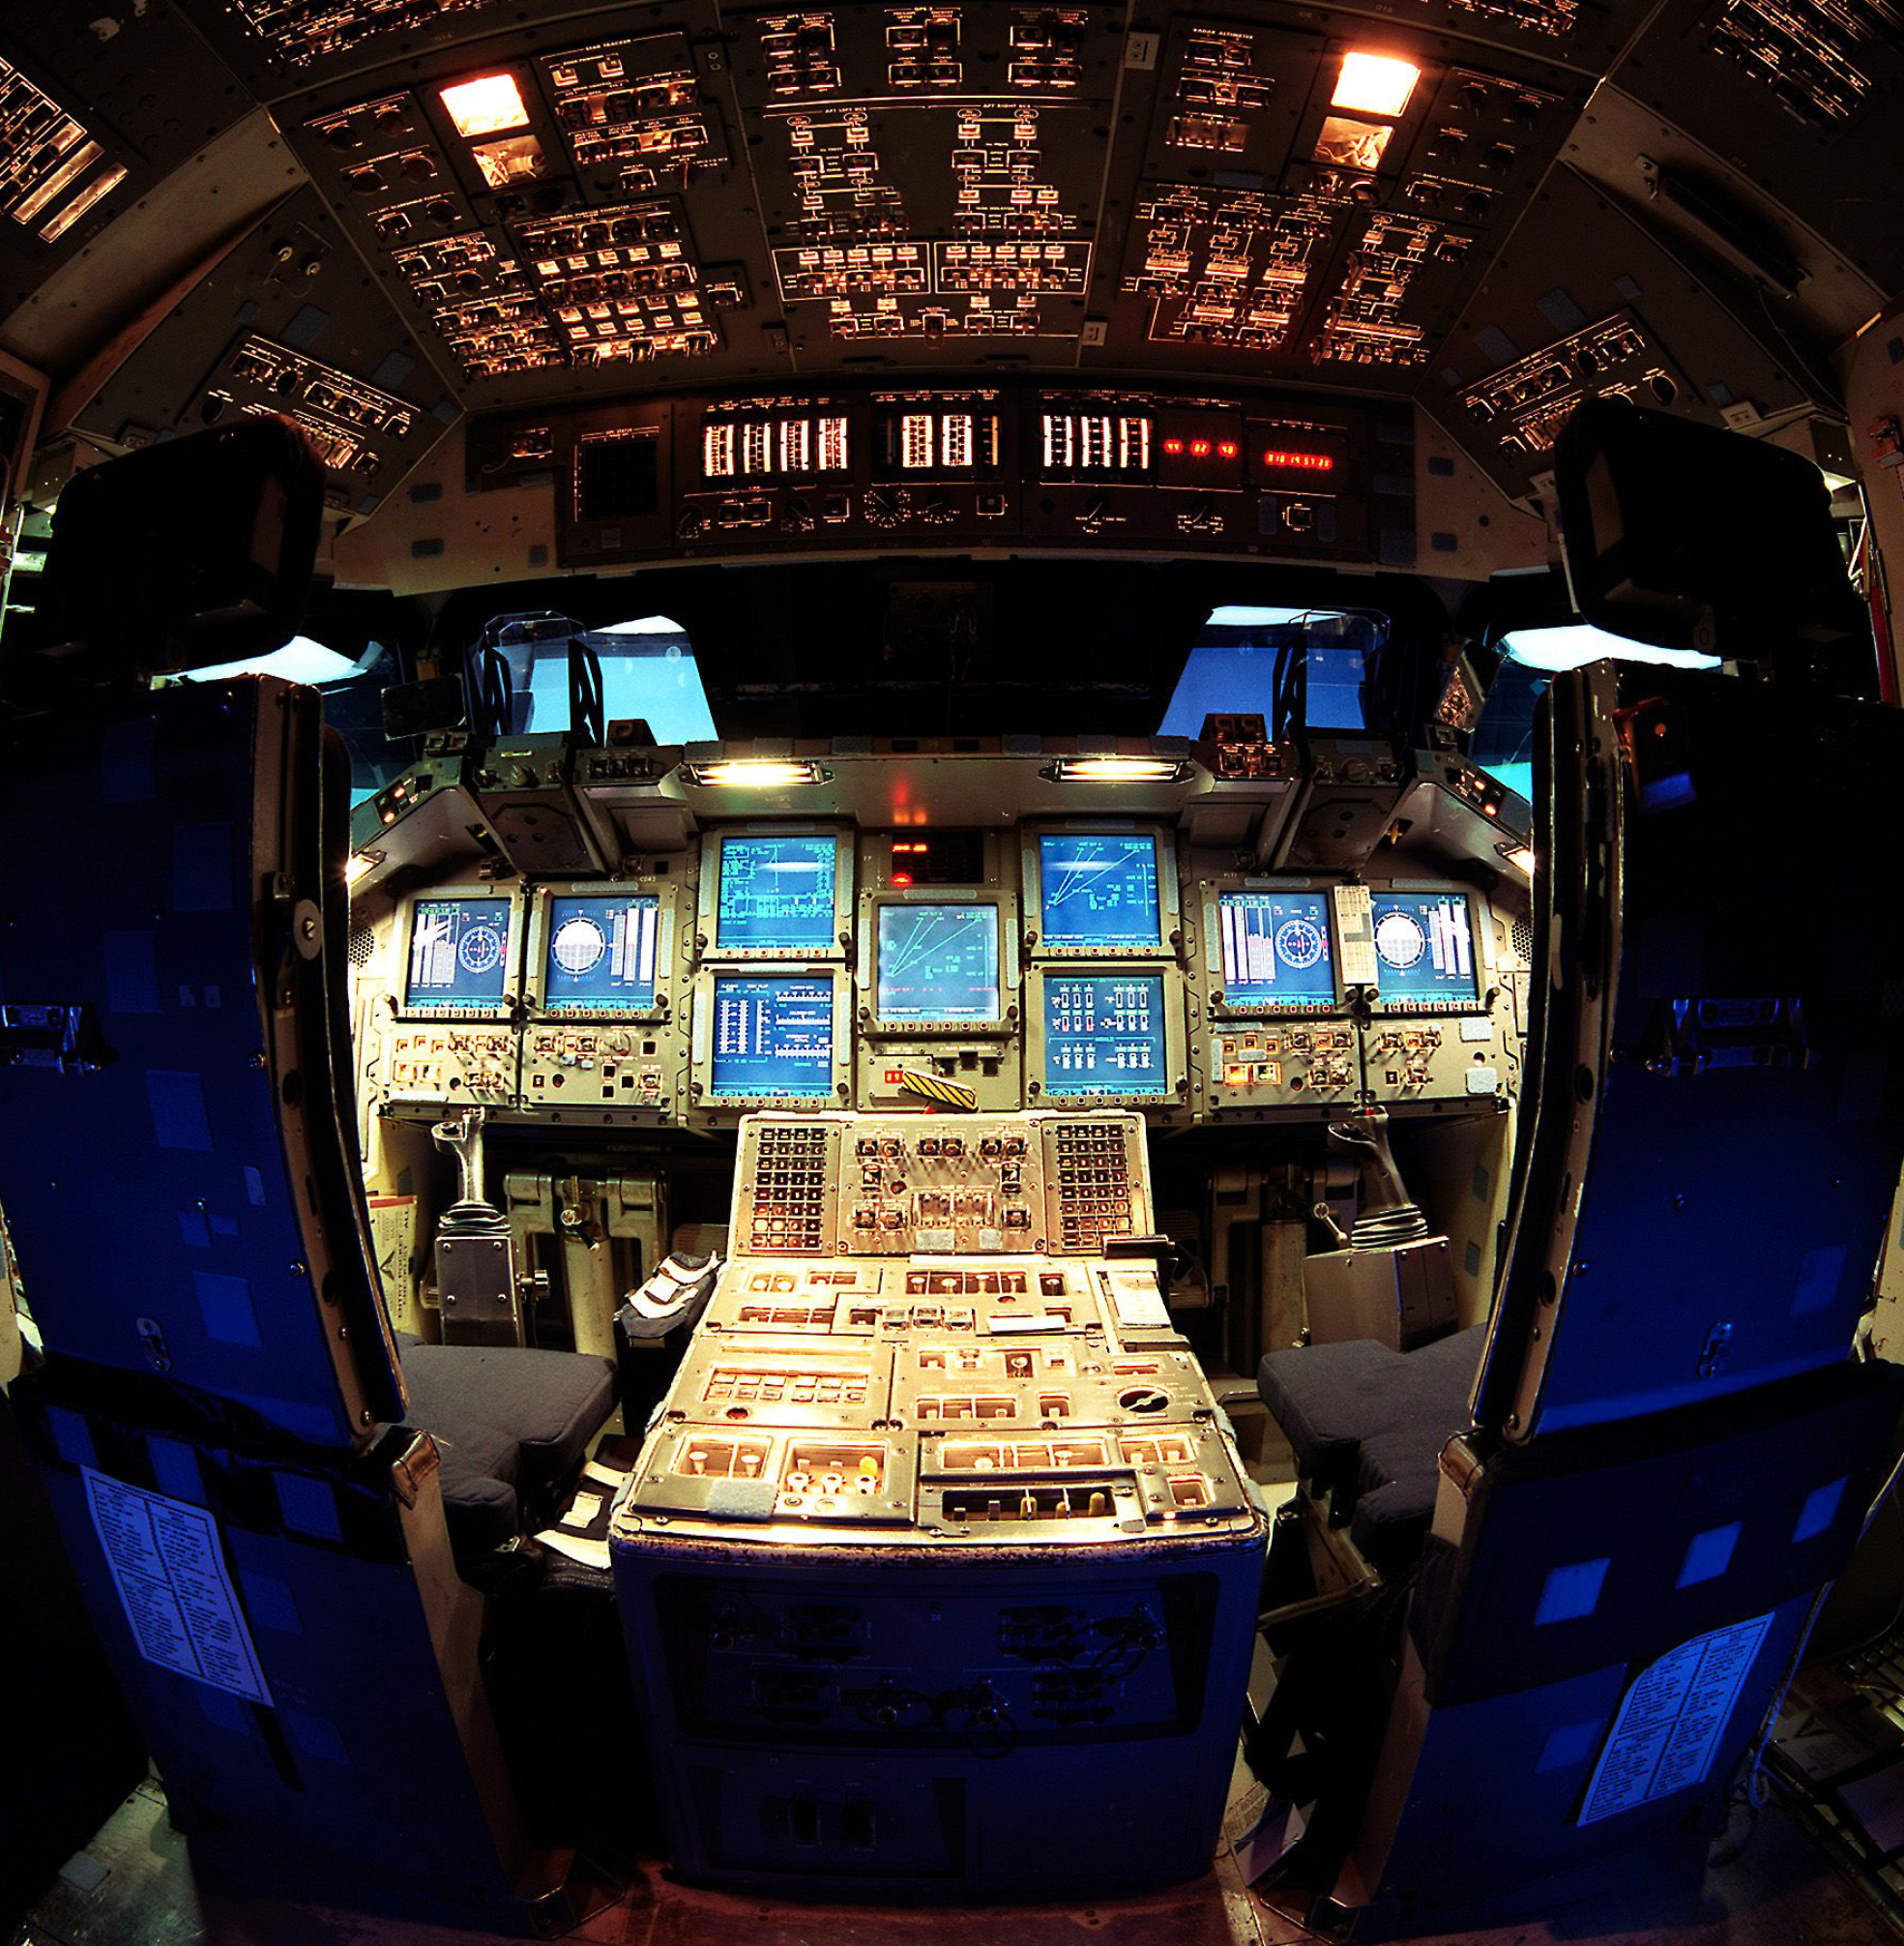 1969x2012 NASA Glass Cockpit Image Library | Nasa history, Space shuttle, Glass cockpit